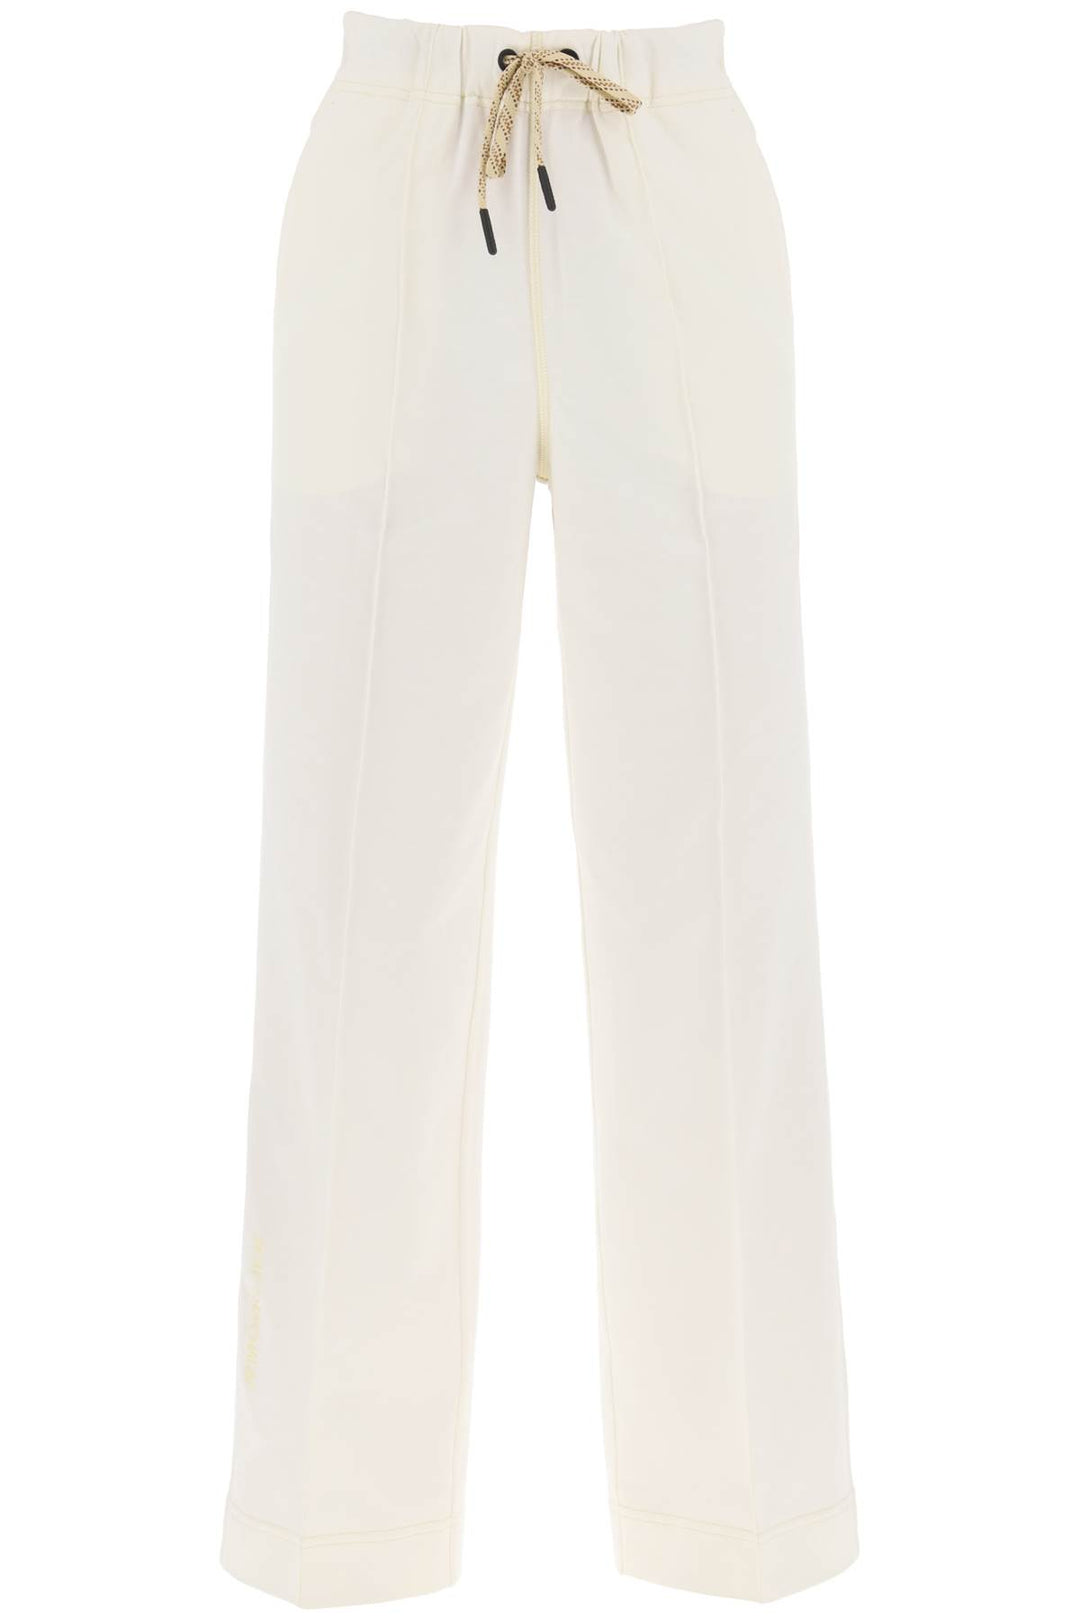 Moncler Grenoble Logoed Sporty Pants   Bianco